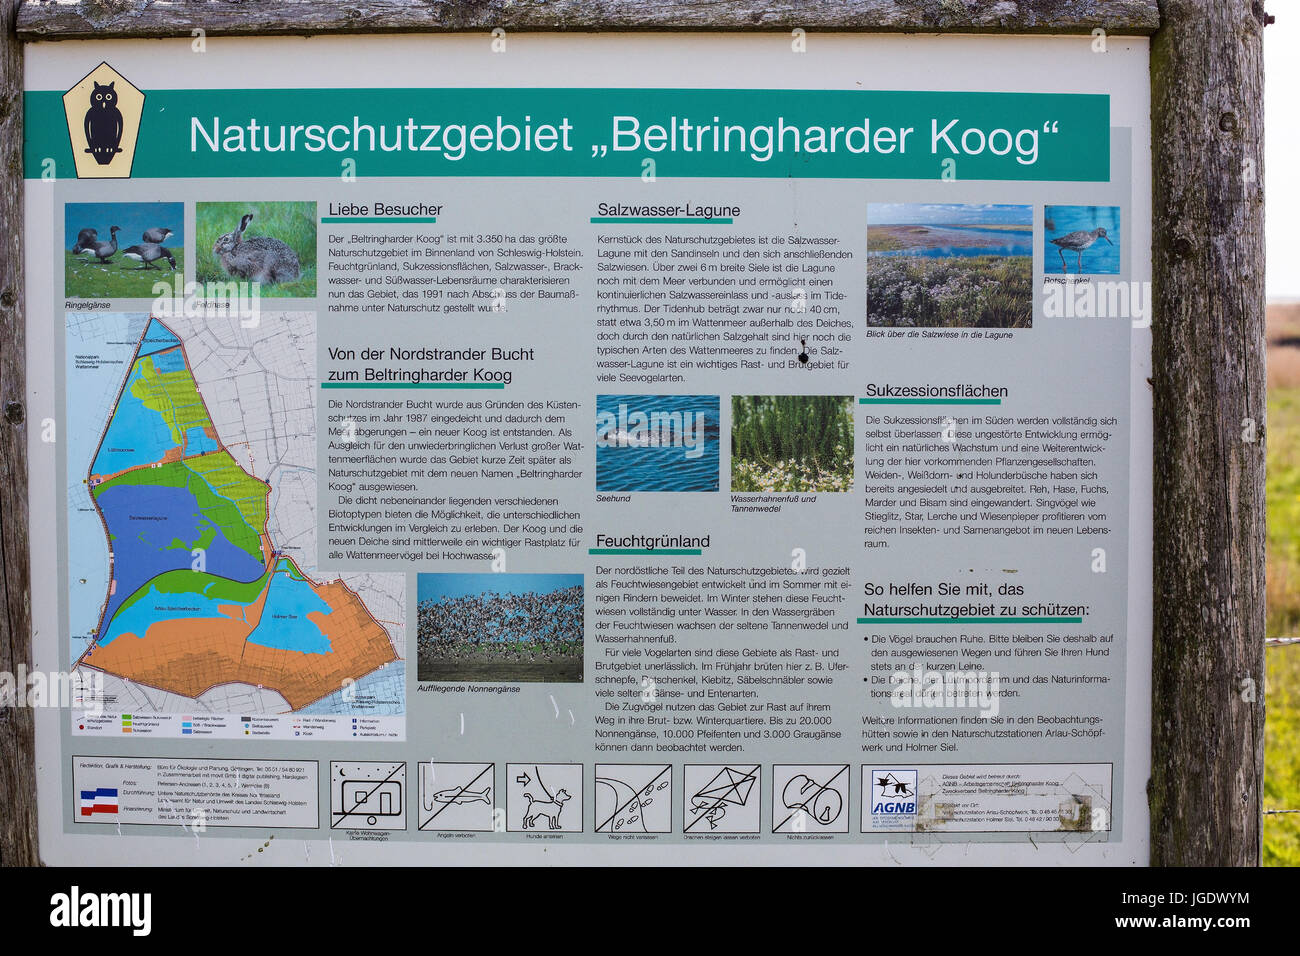 Tip board nature reserve Beltringharder of Koog, Hinweistafel Naturschutzgebiet Beltringharder Koog Stock Photo